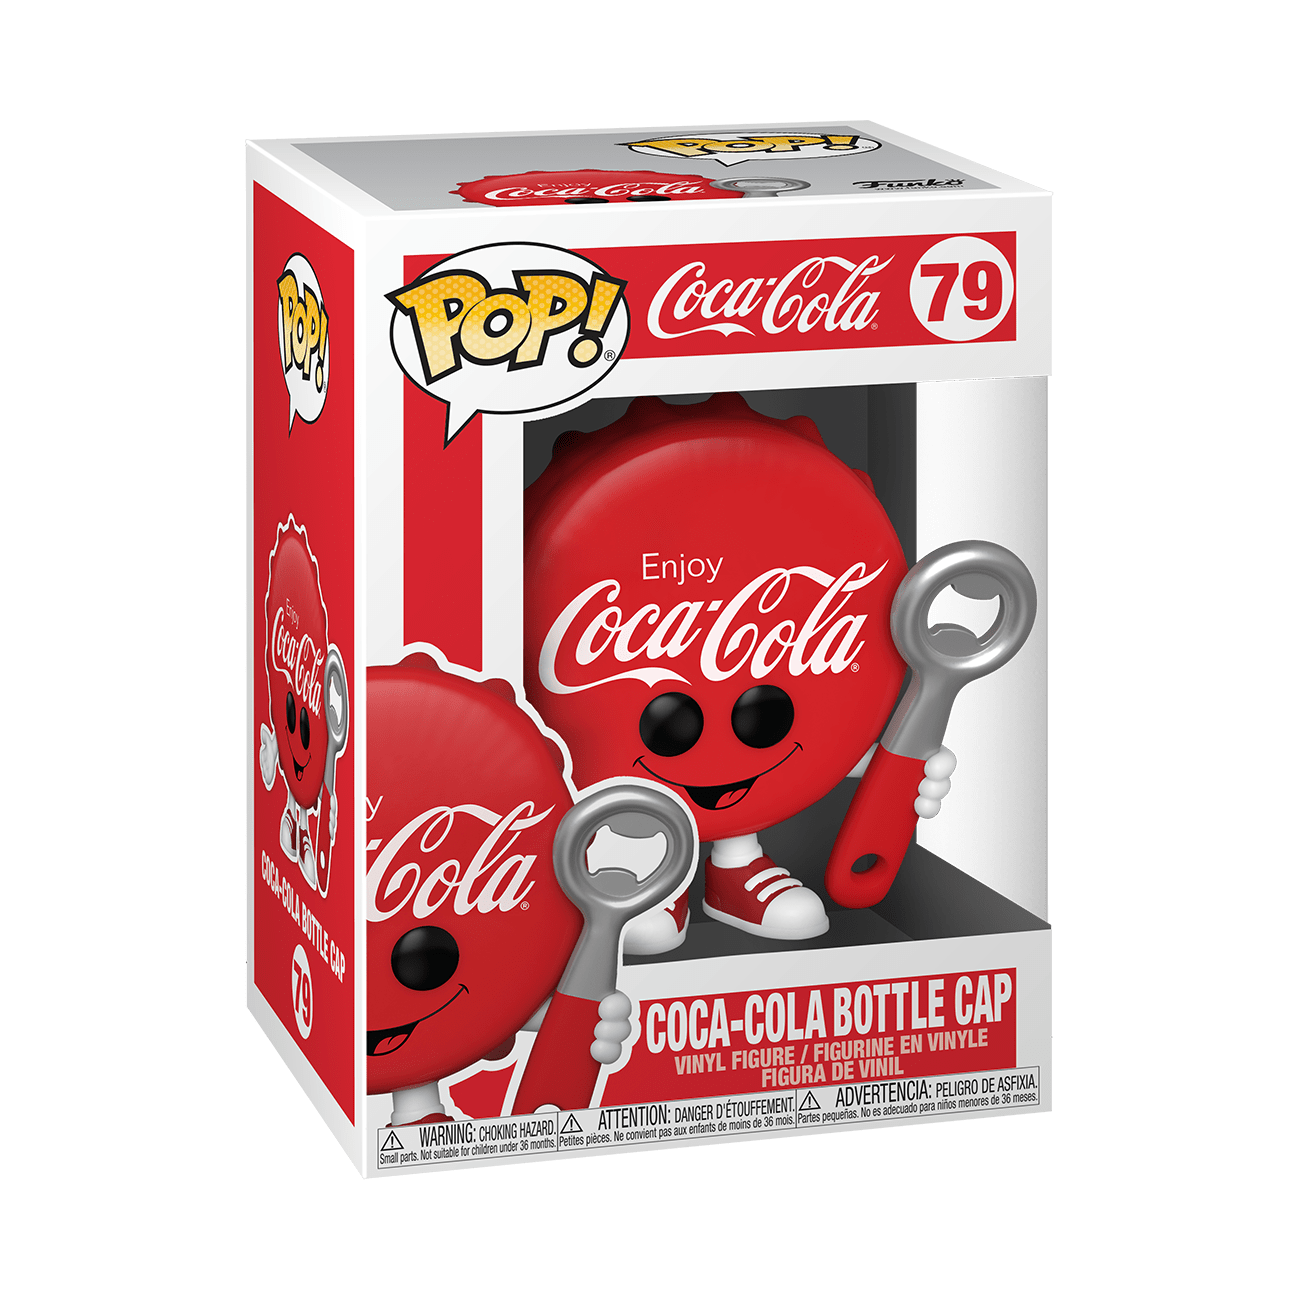 Funko Pop! Coca-Cola - Coca-Cola Santa #159